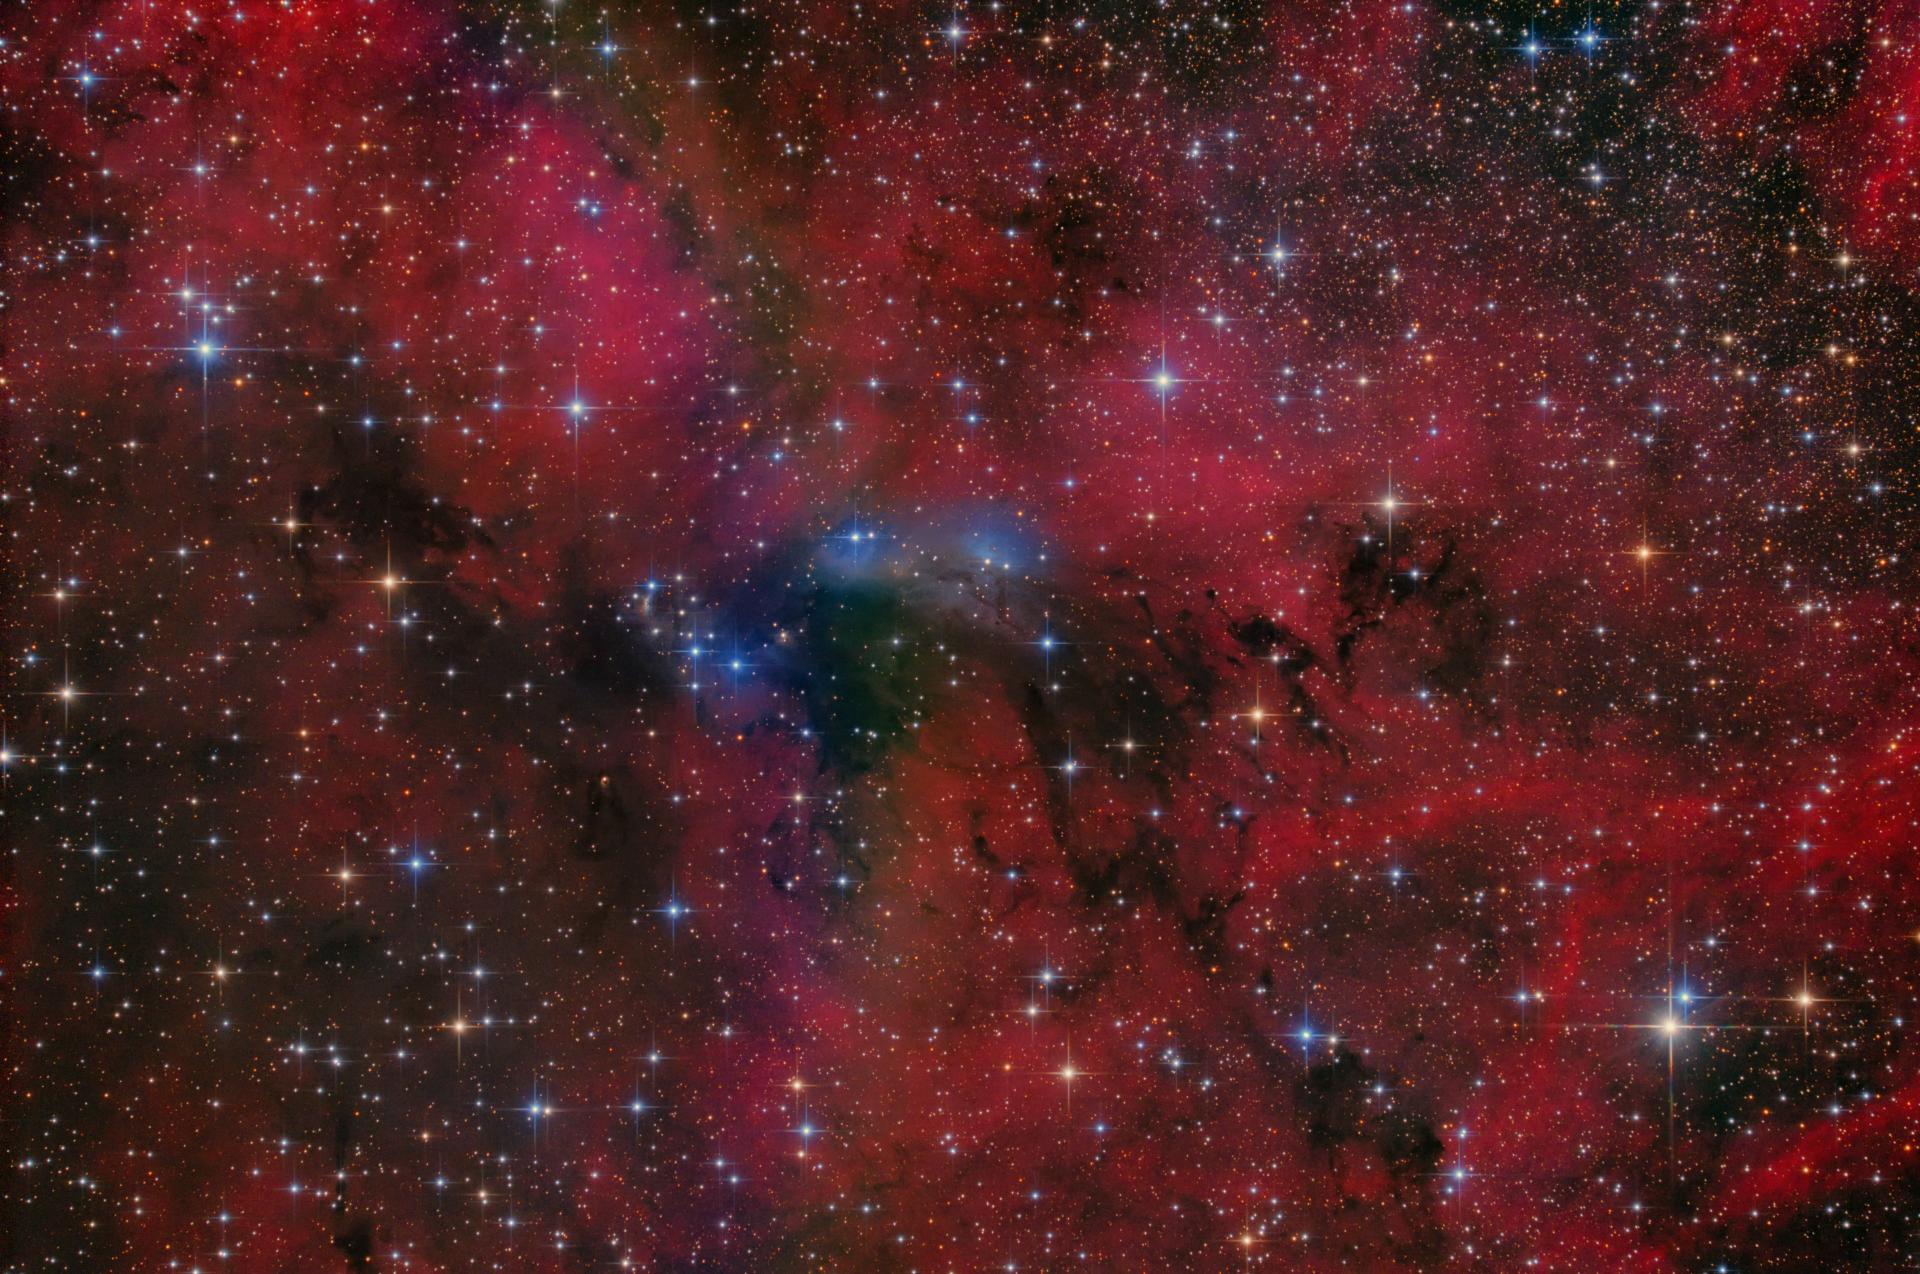 NGC6914_PS-Stack1-V32crop-Mischung.jpg